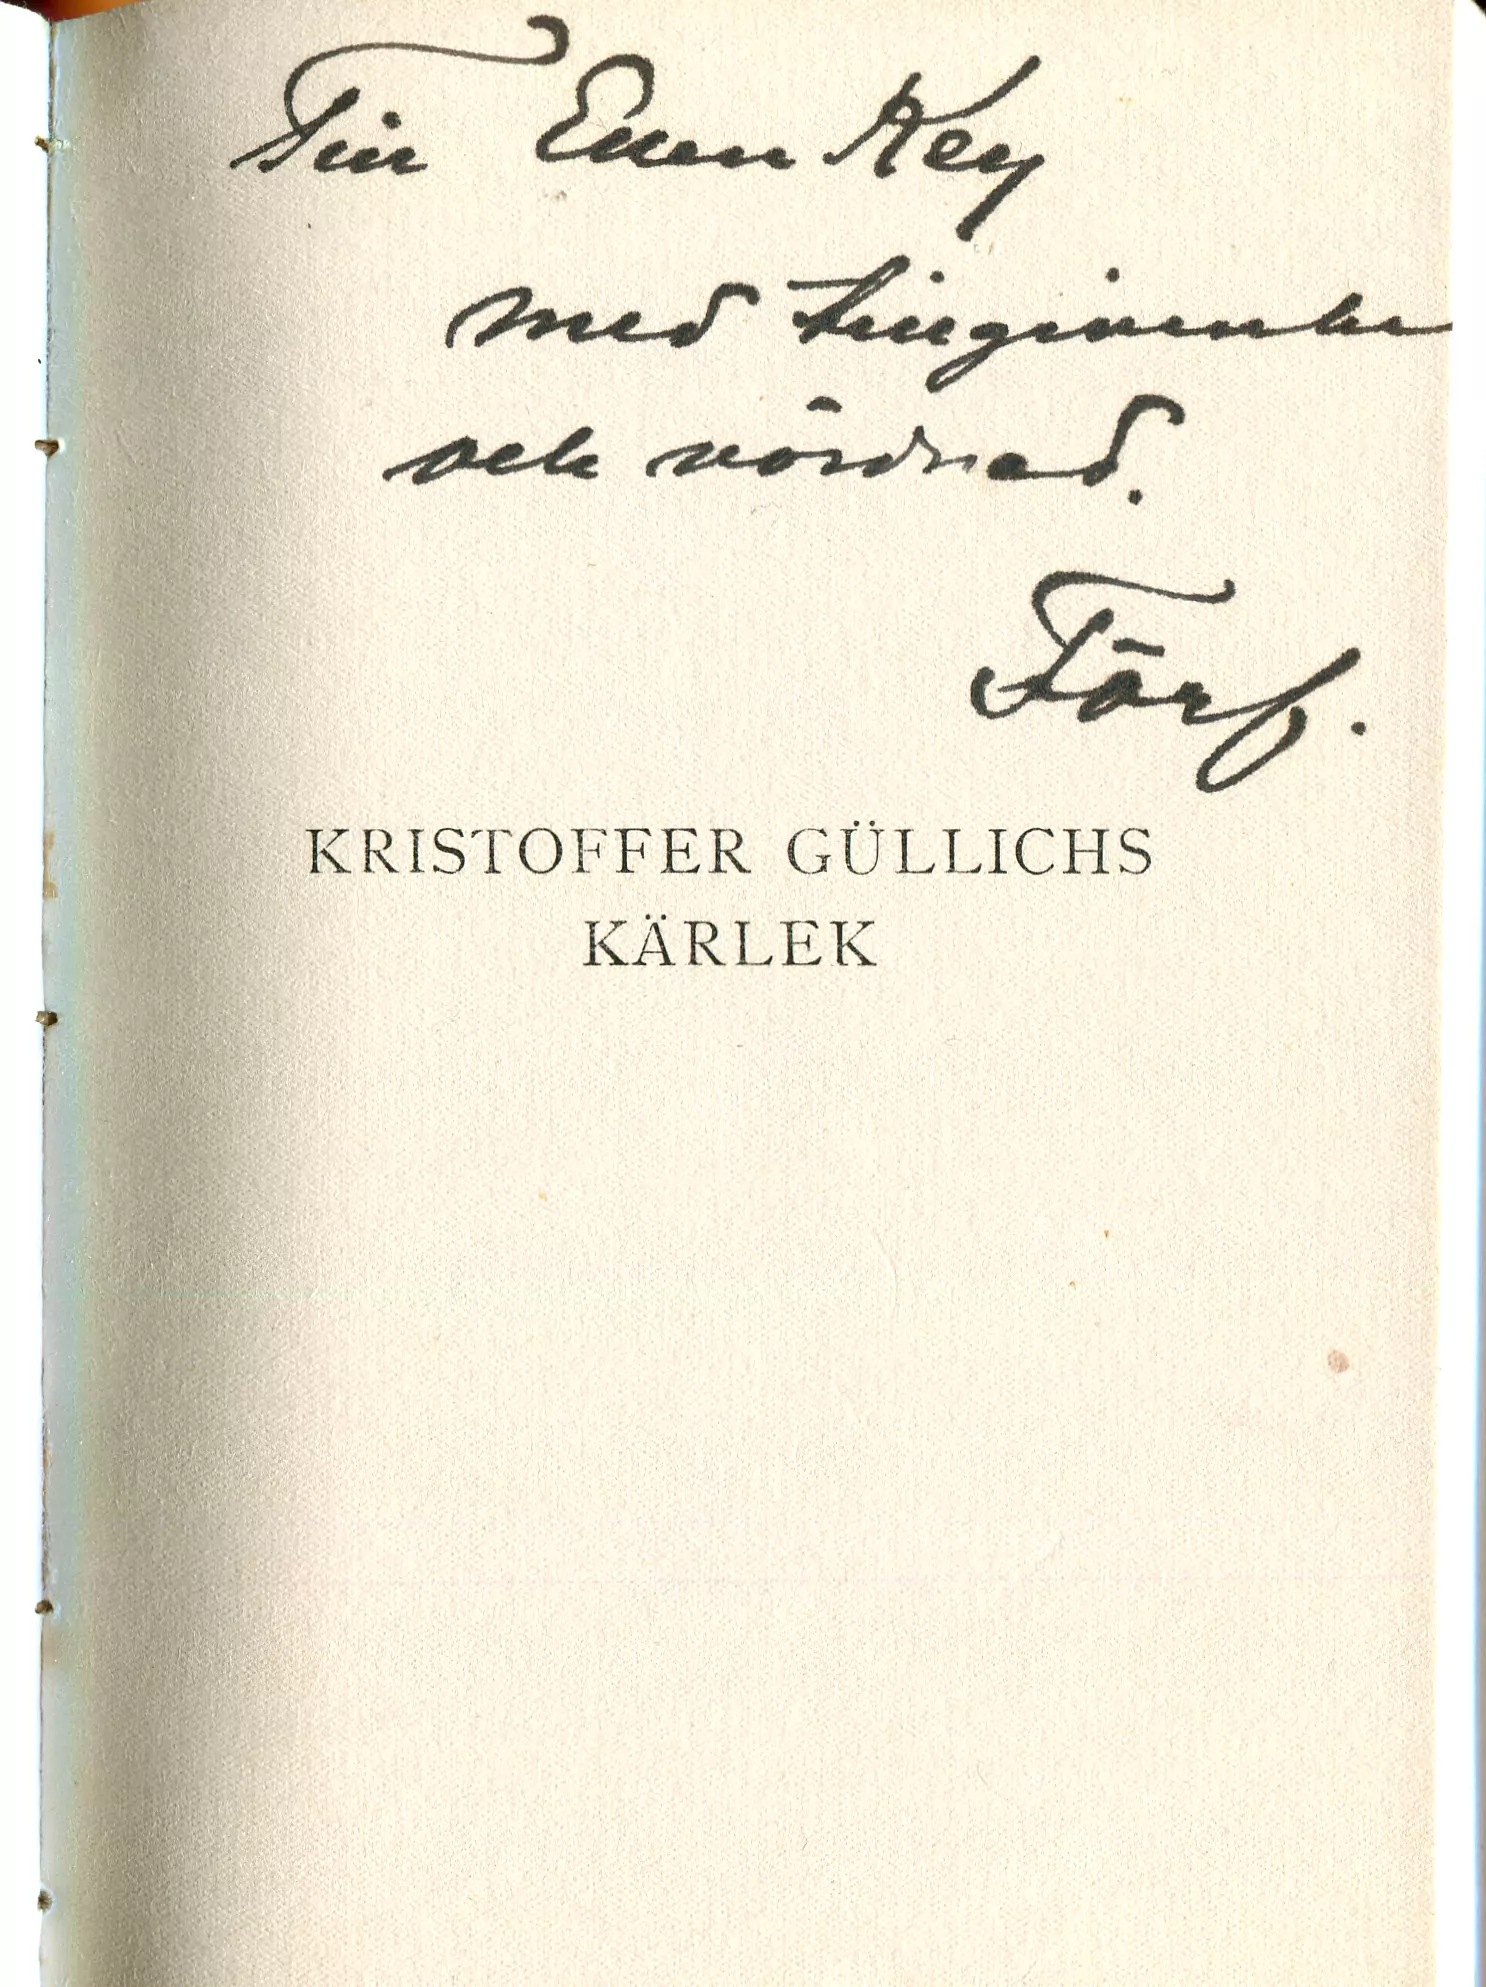 Kristoffer Güllichs kärlek , Stockholm 1917